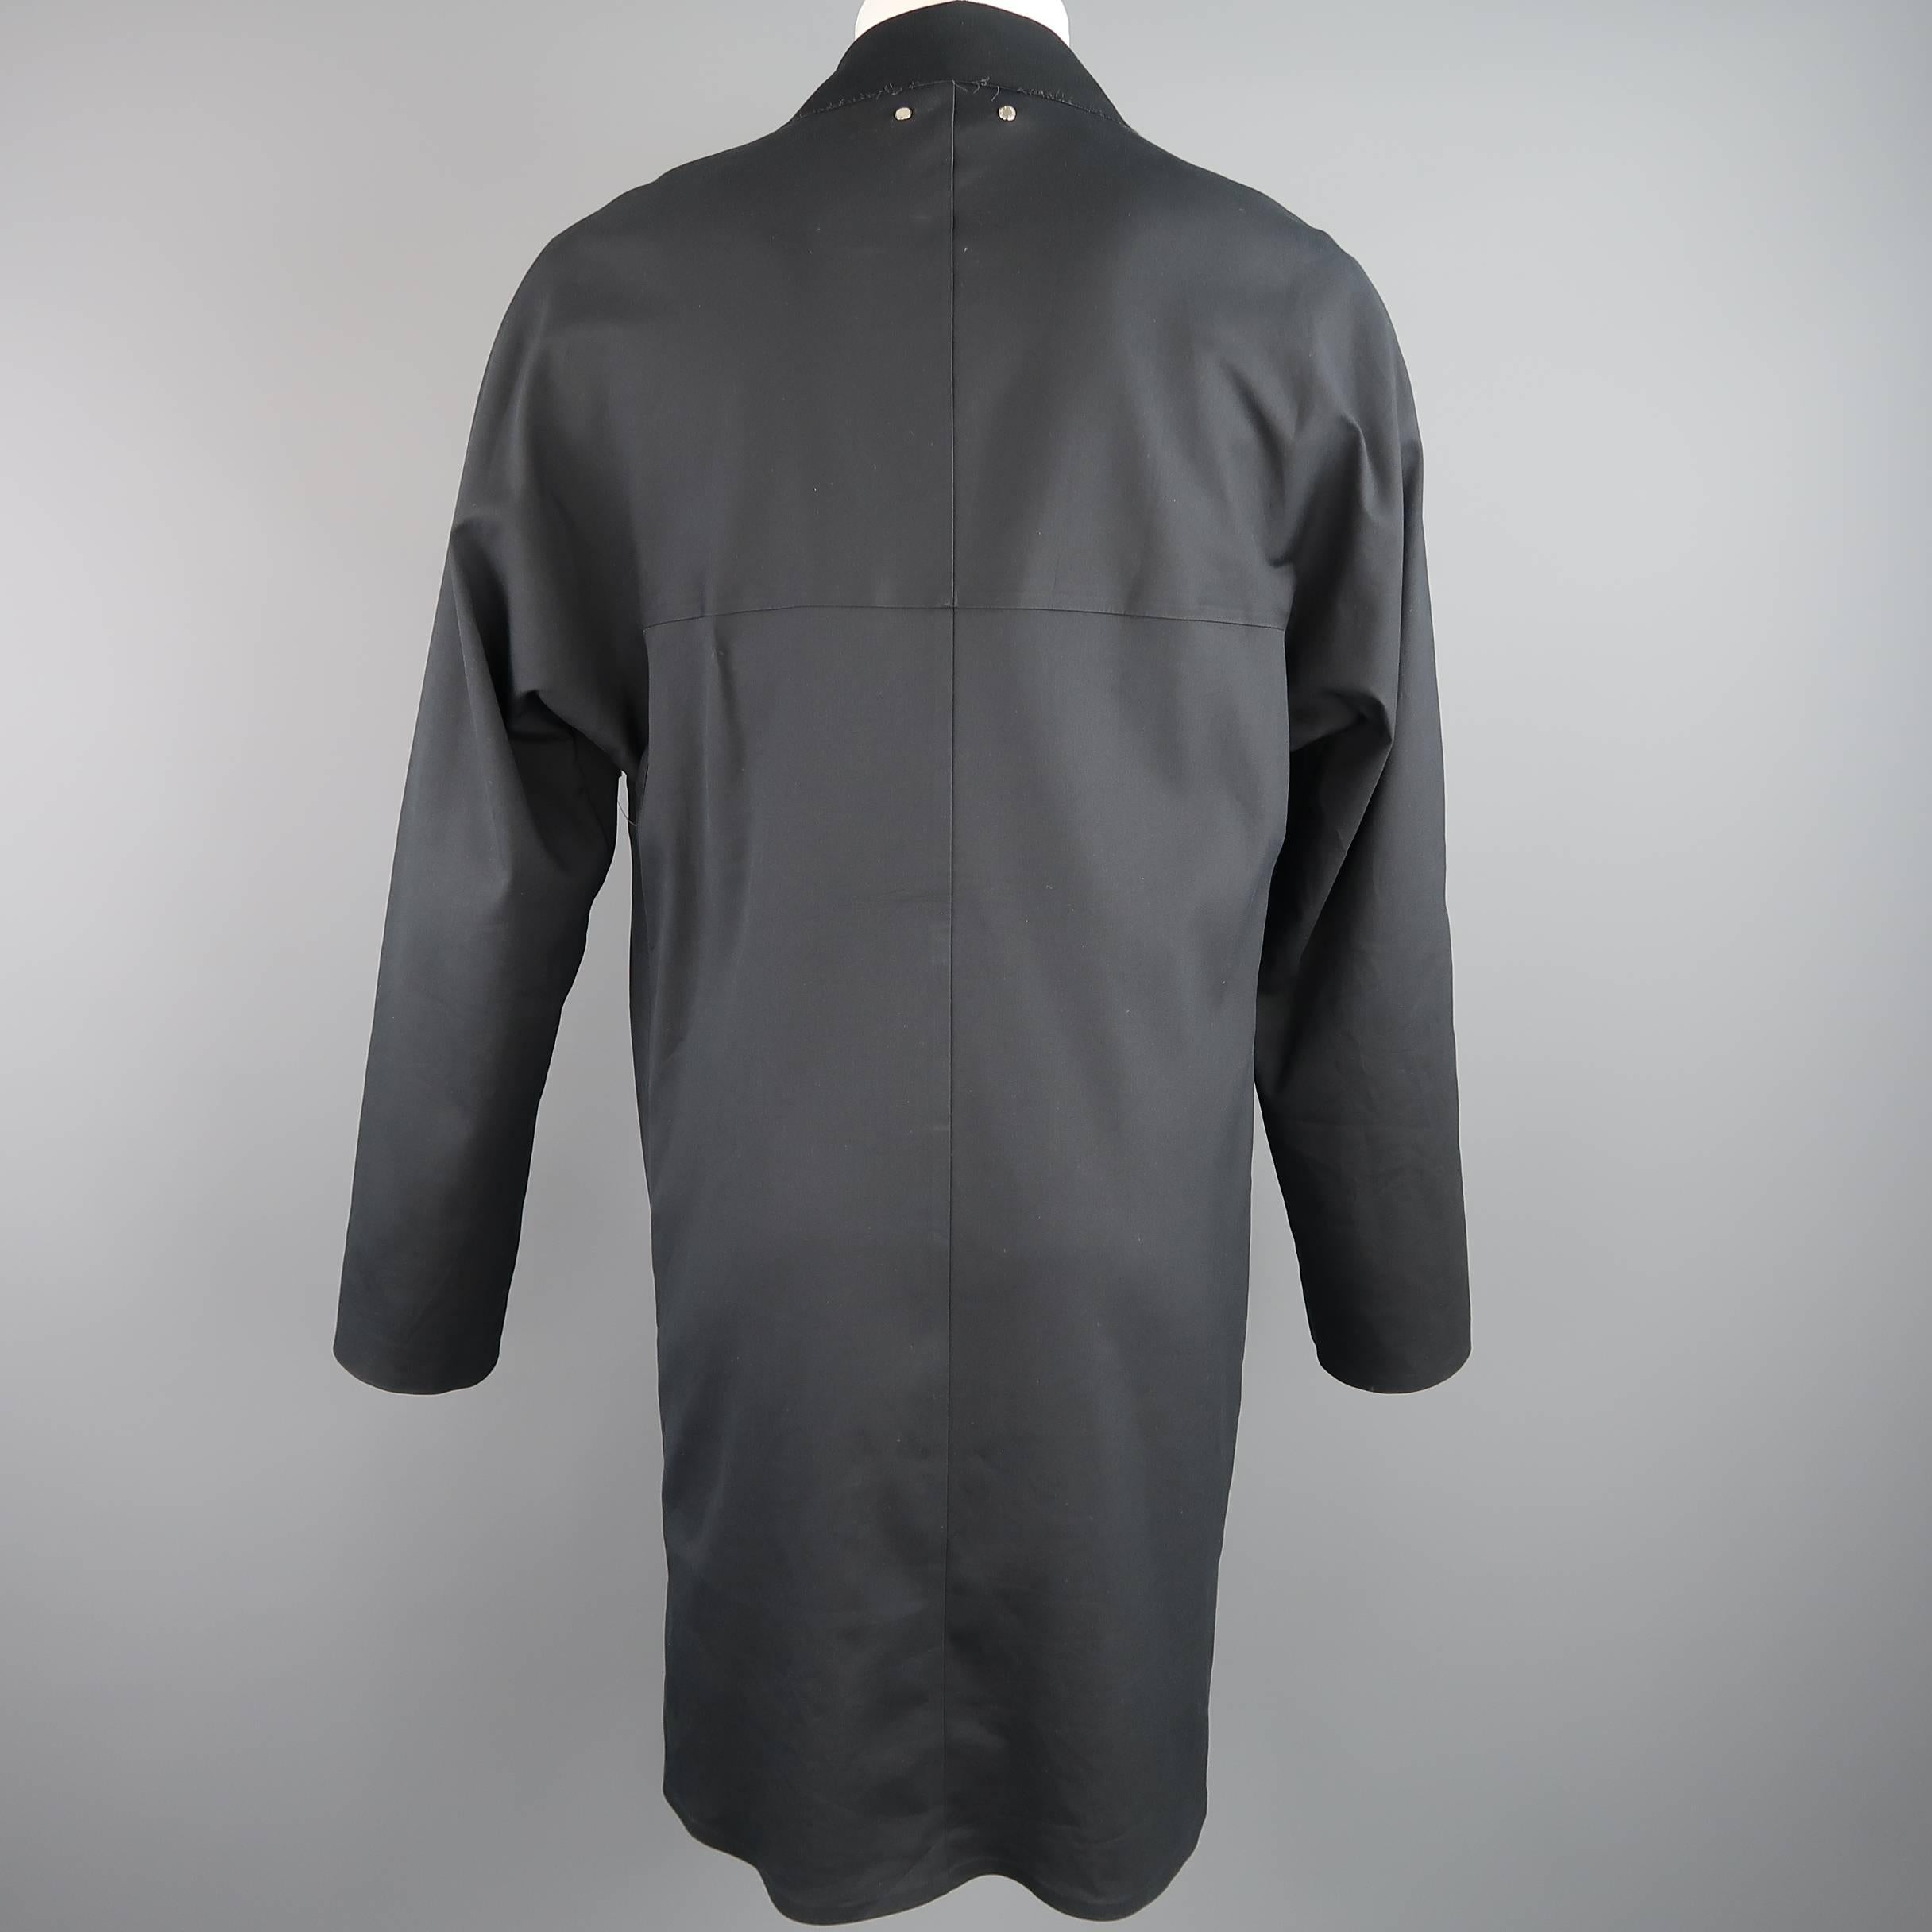 Black Men's LOUIS VUITTON Coat 40 Midnight Navy Coated Cotton Collared Car Jacket